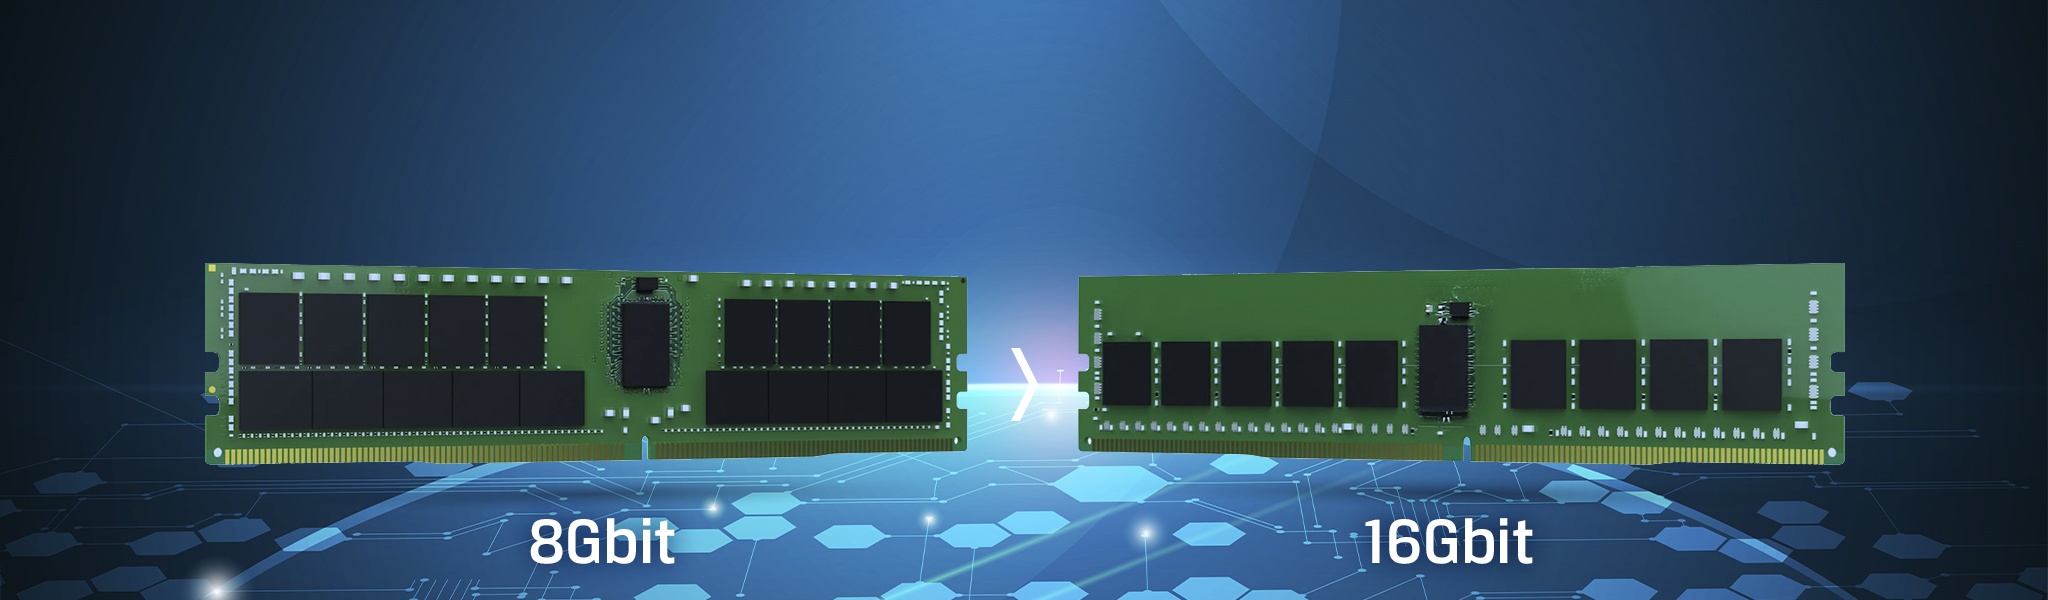 8Gbit and 16Gbit DDR4 memory modules visual comparison